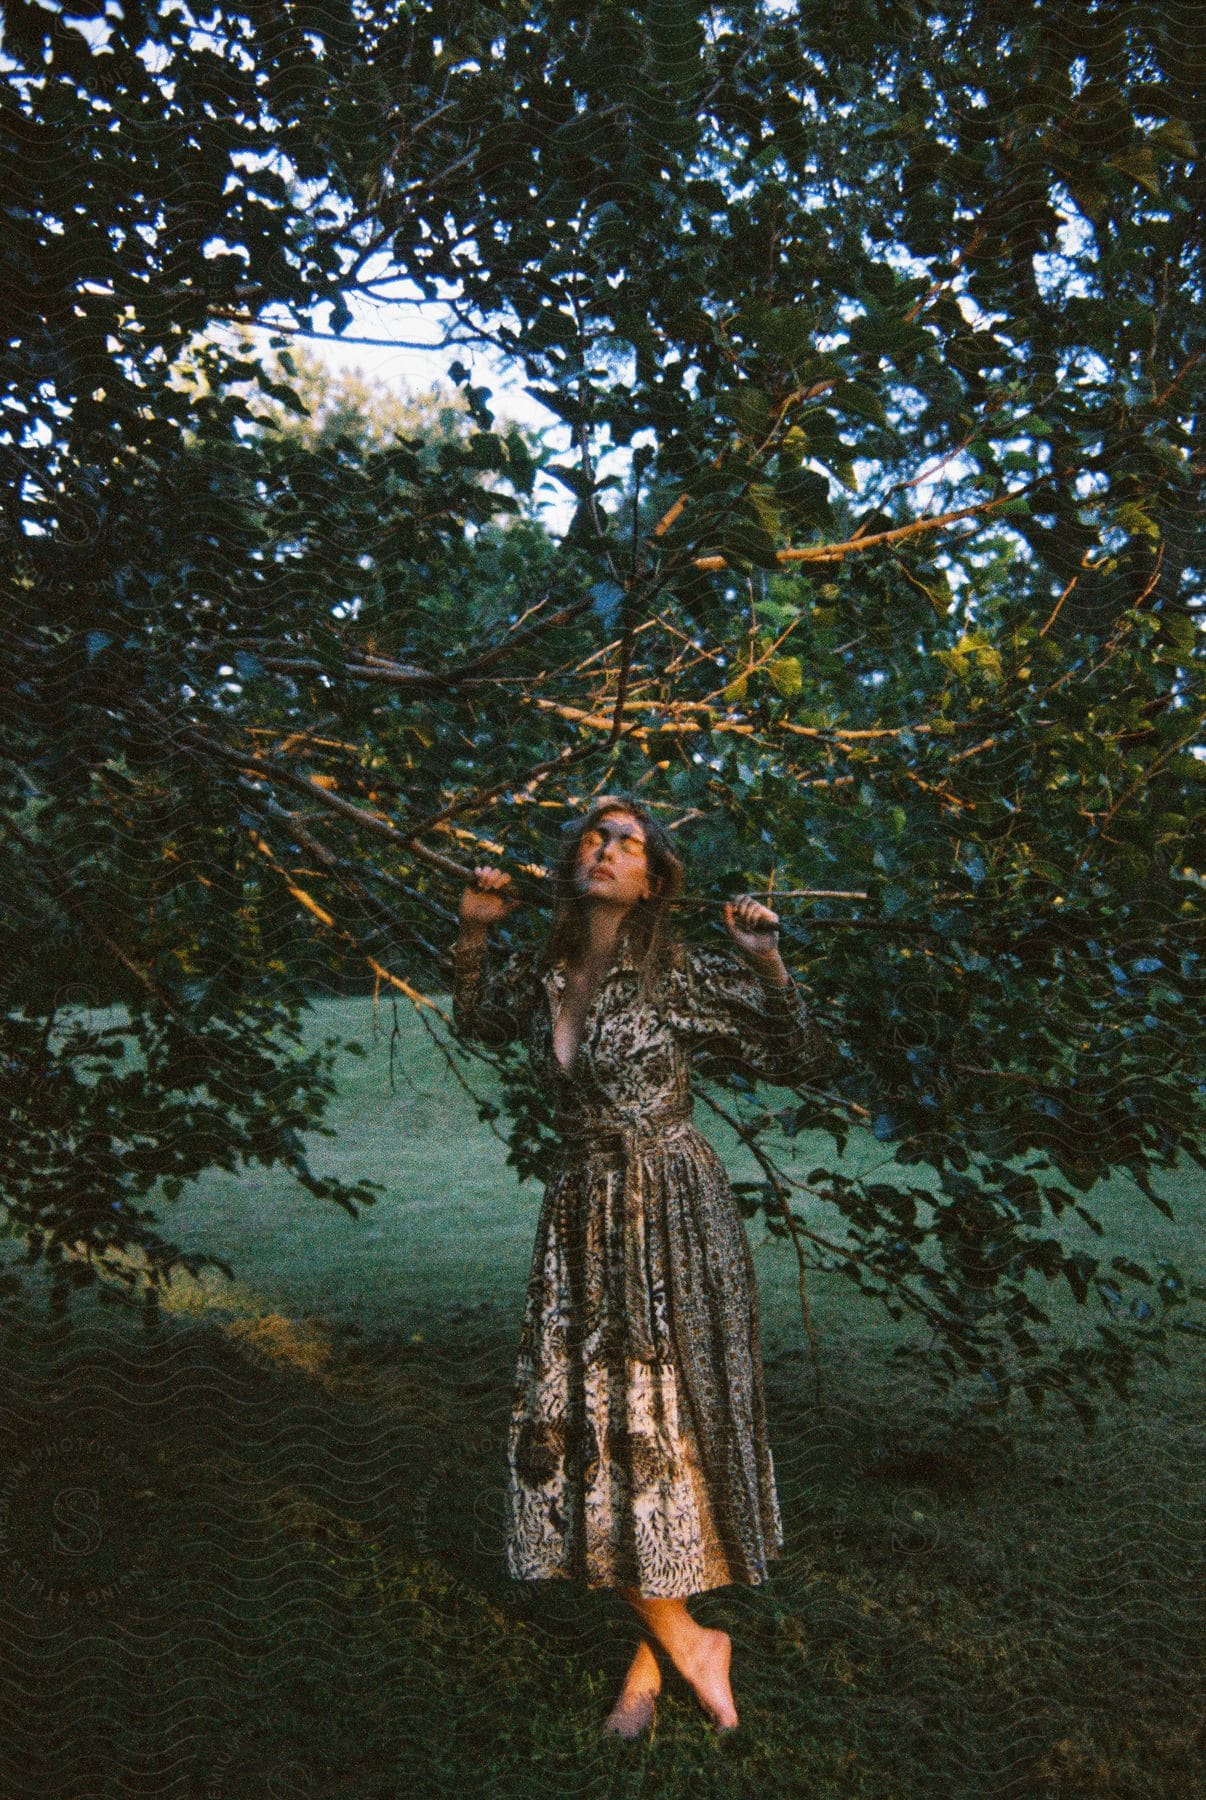 Woman models dress outdoors near tree